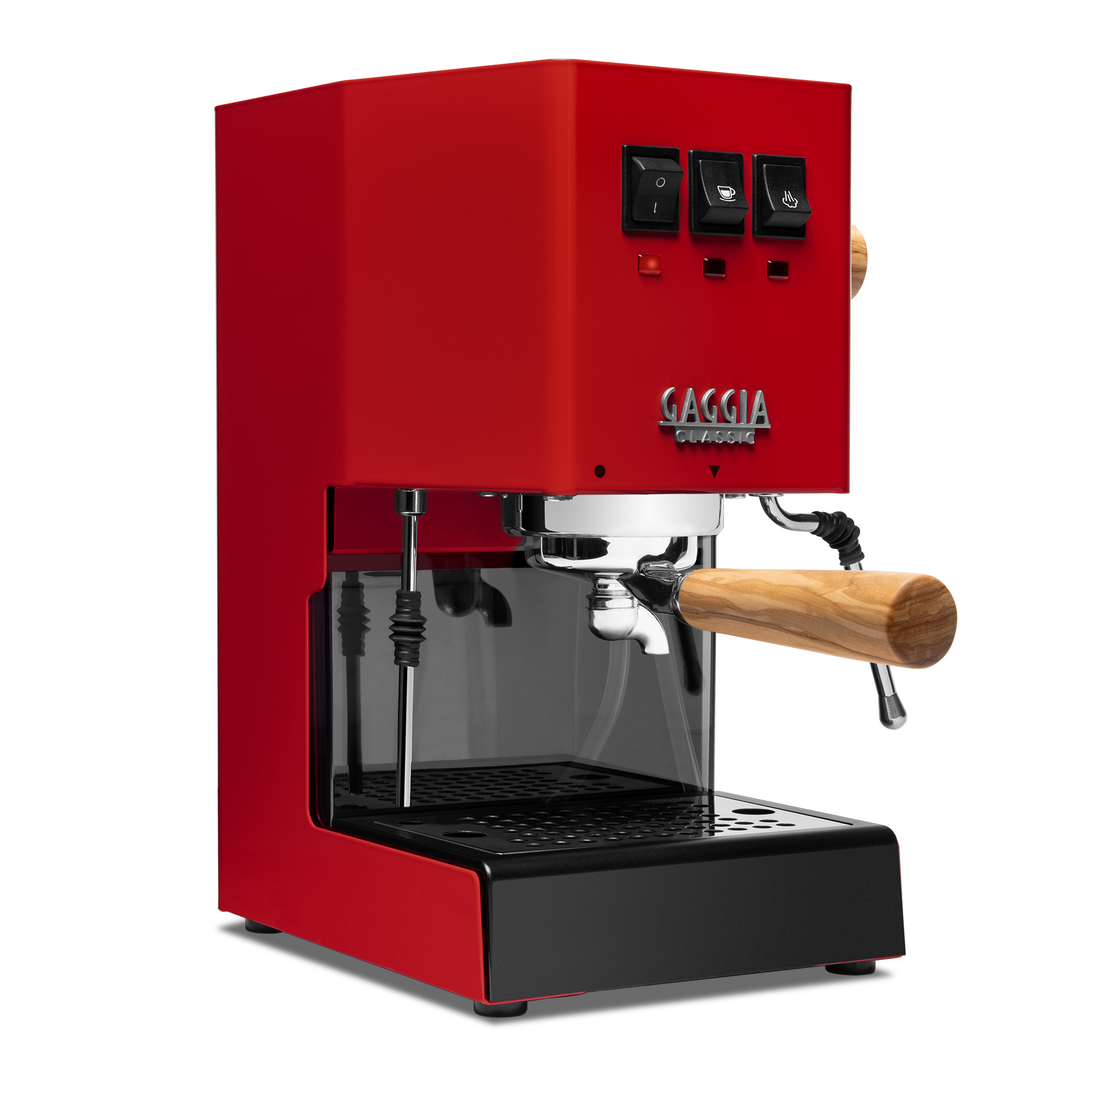 Gaggia Classic Evo Pro Espresso Machine in Cherry Red with Olive Wood